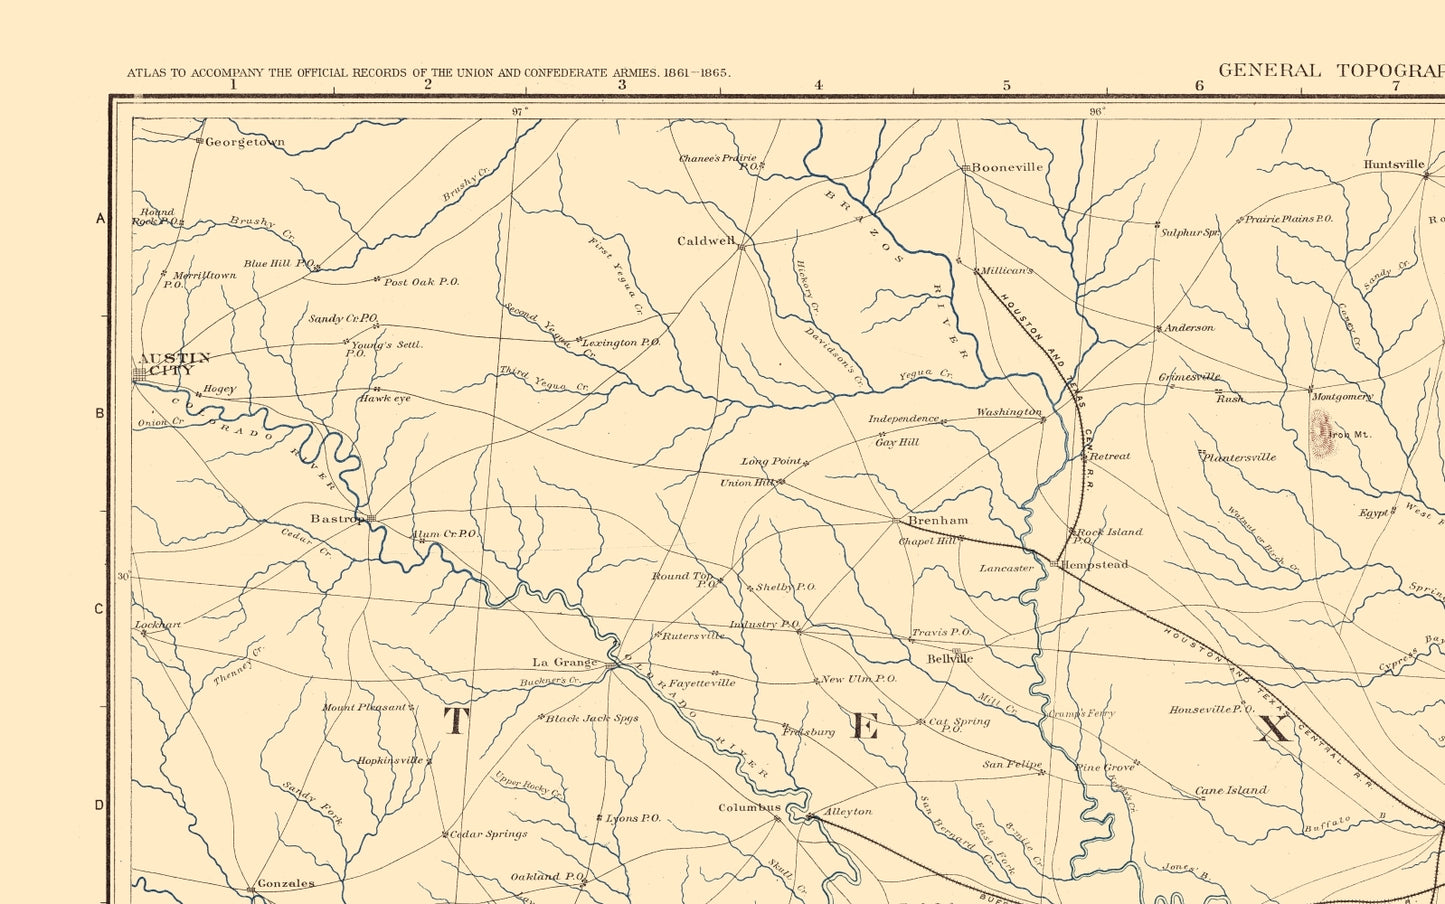 Historical Civil War Map - Texas Louisiana Gulf Coast - Bien 1895 - 23 x 36.76 - Vintage Wall Art